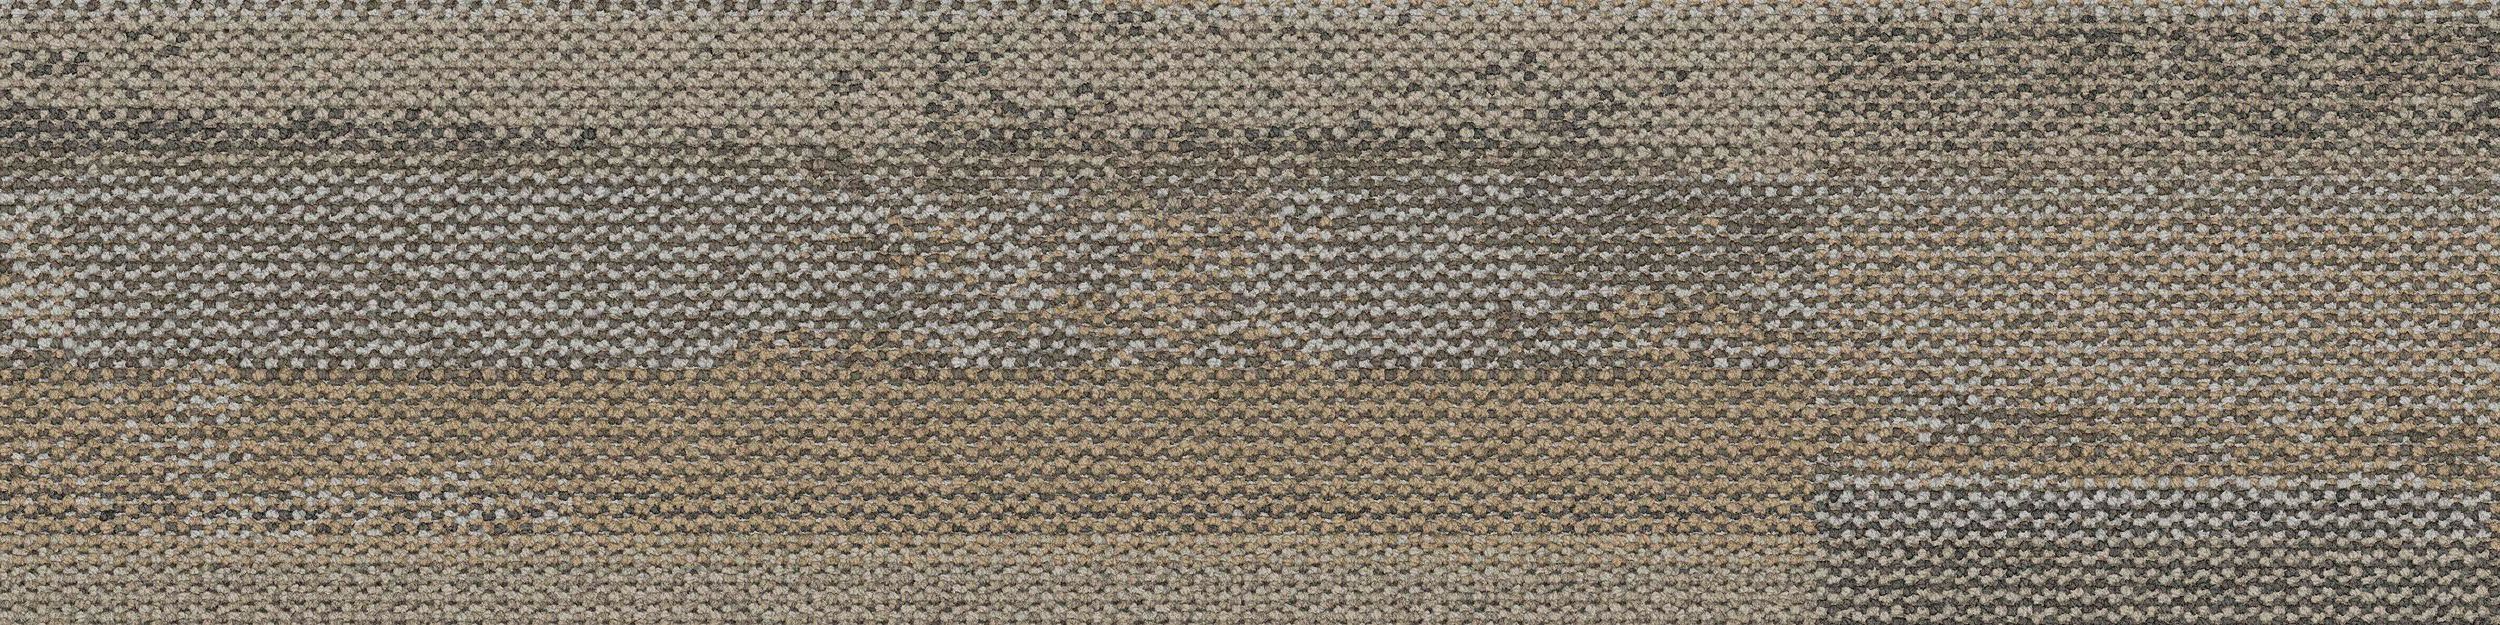 Reclaim Carpet Tile In Cottage Taupe image number 2